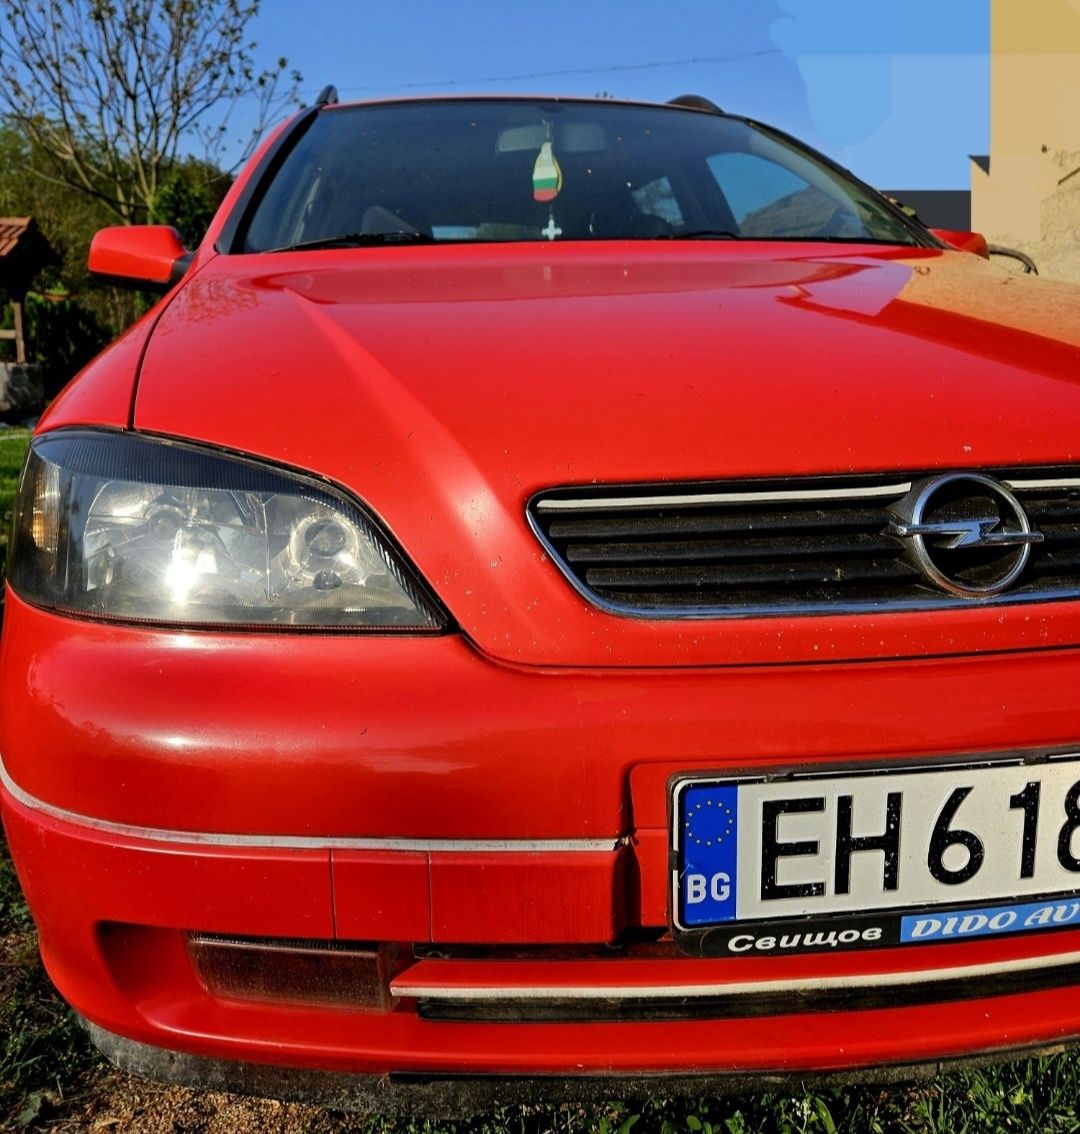 Opel Astra  G 2.0 DTI 2003